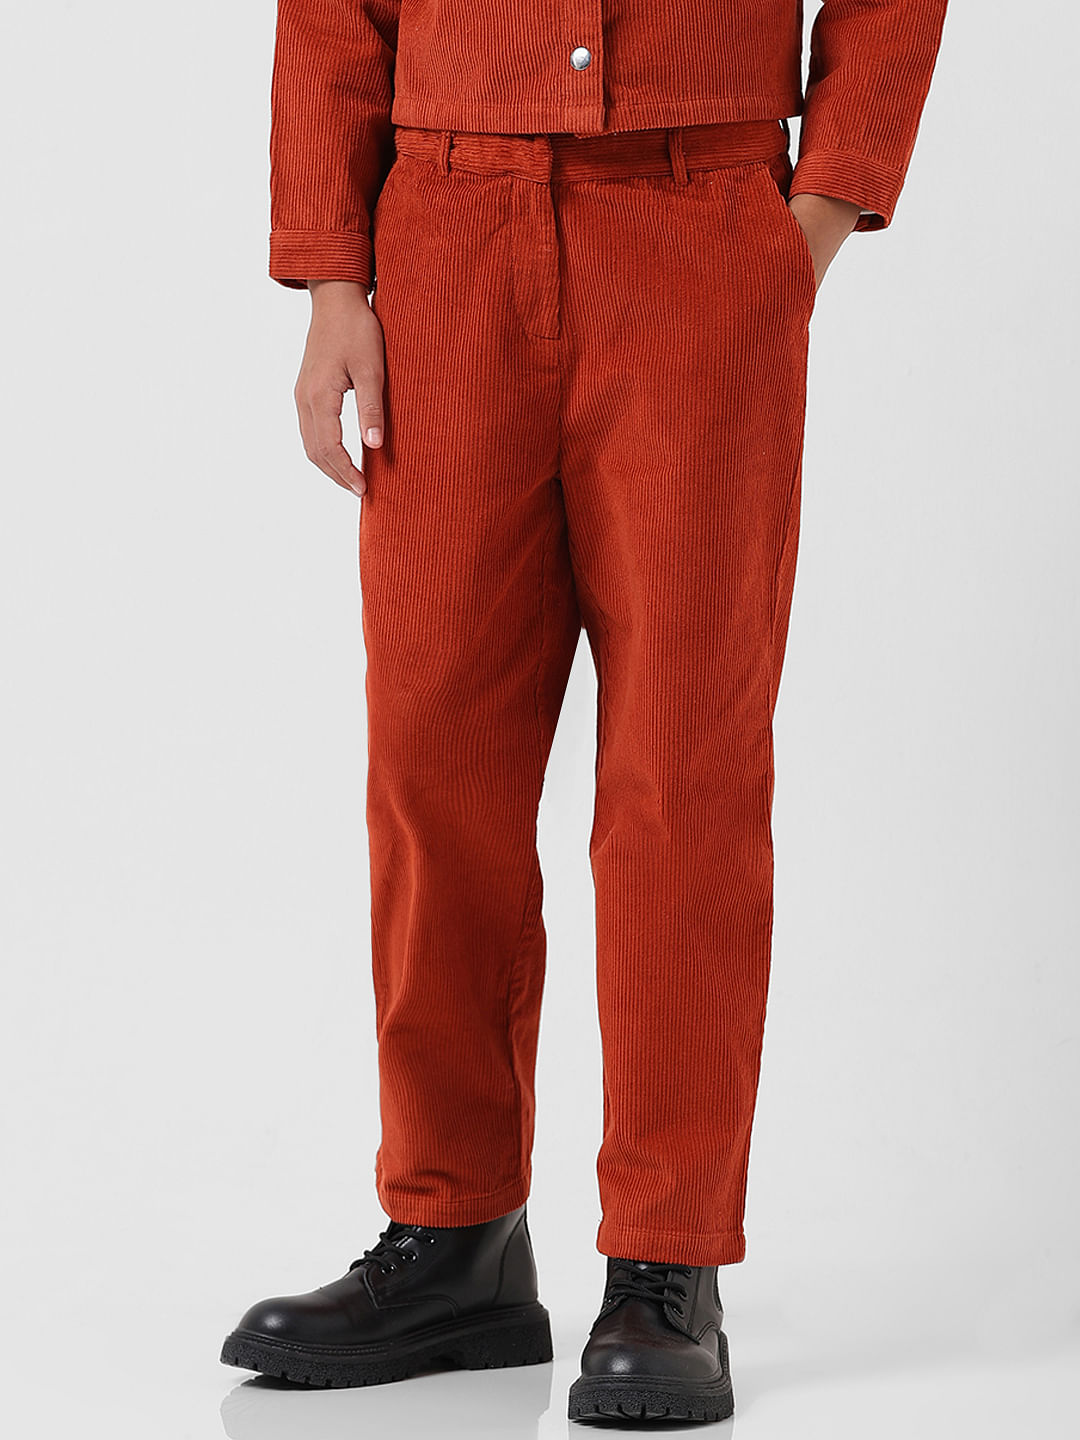 Vintage Corduroy Pants Red Corduroy Trousers W27 Red Corduroy Pants Retro Red  Corduroy Pants Mens Cord Pants Red Womens Cord Pants W27 - Etsy